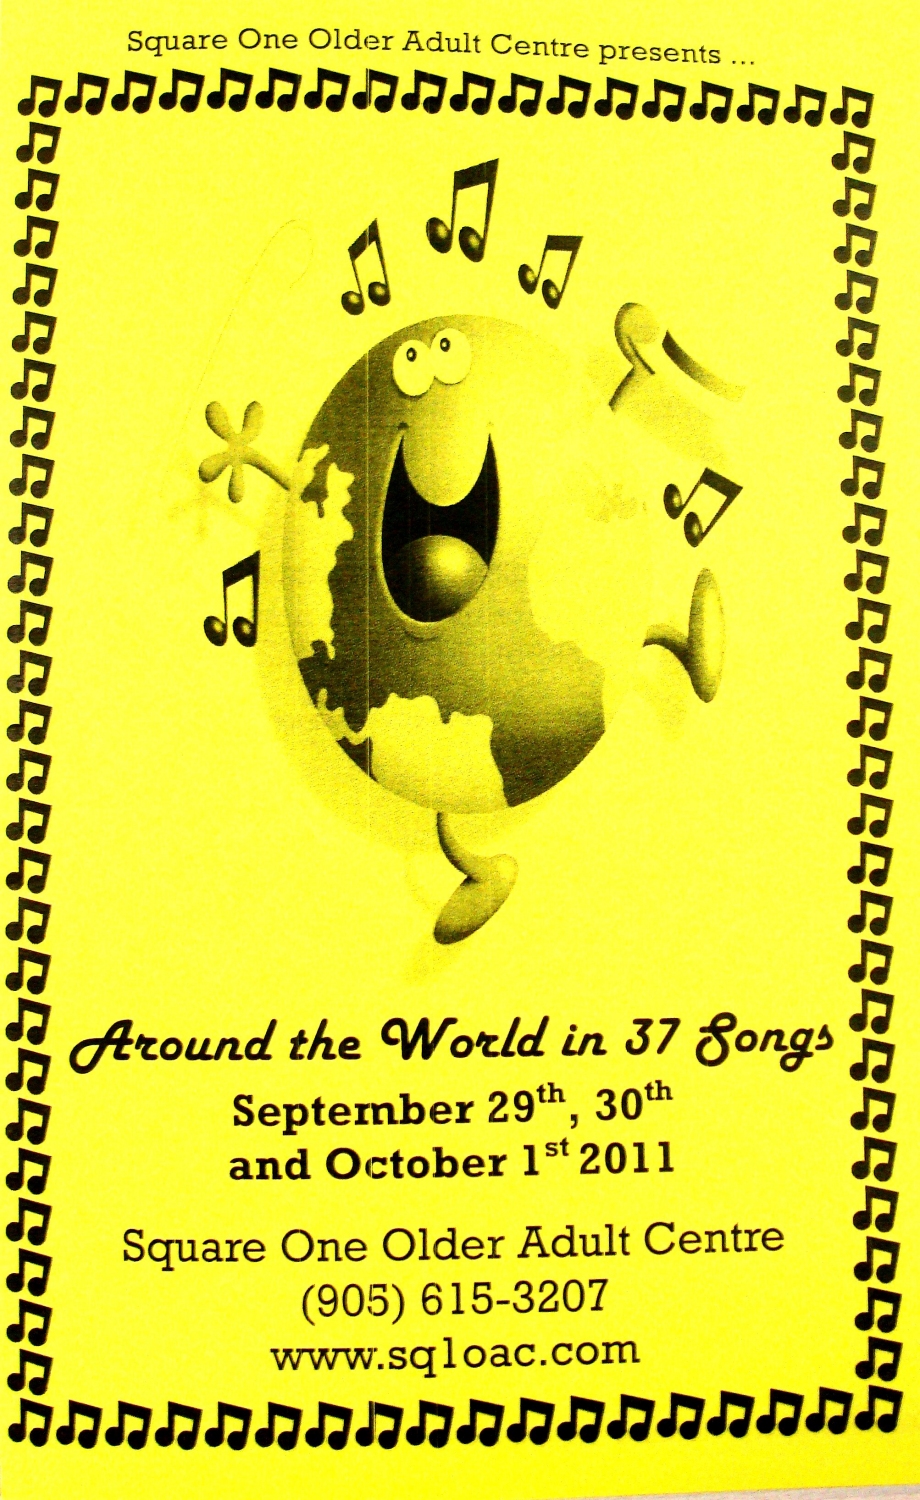 Around the World in 37 Songs adapted from Music Around the World Google image from http://1.bp.blogspot.com/_abwexzQx0bo/Swi4Njt4K-I/AAAAAAAAAi4/jC3b1boppsQ/s400/World+Music.jpg